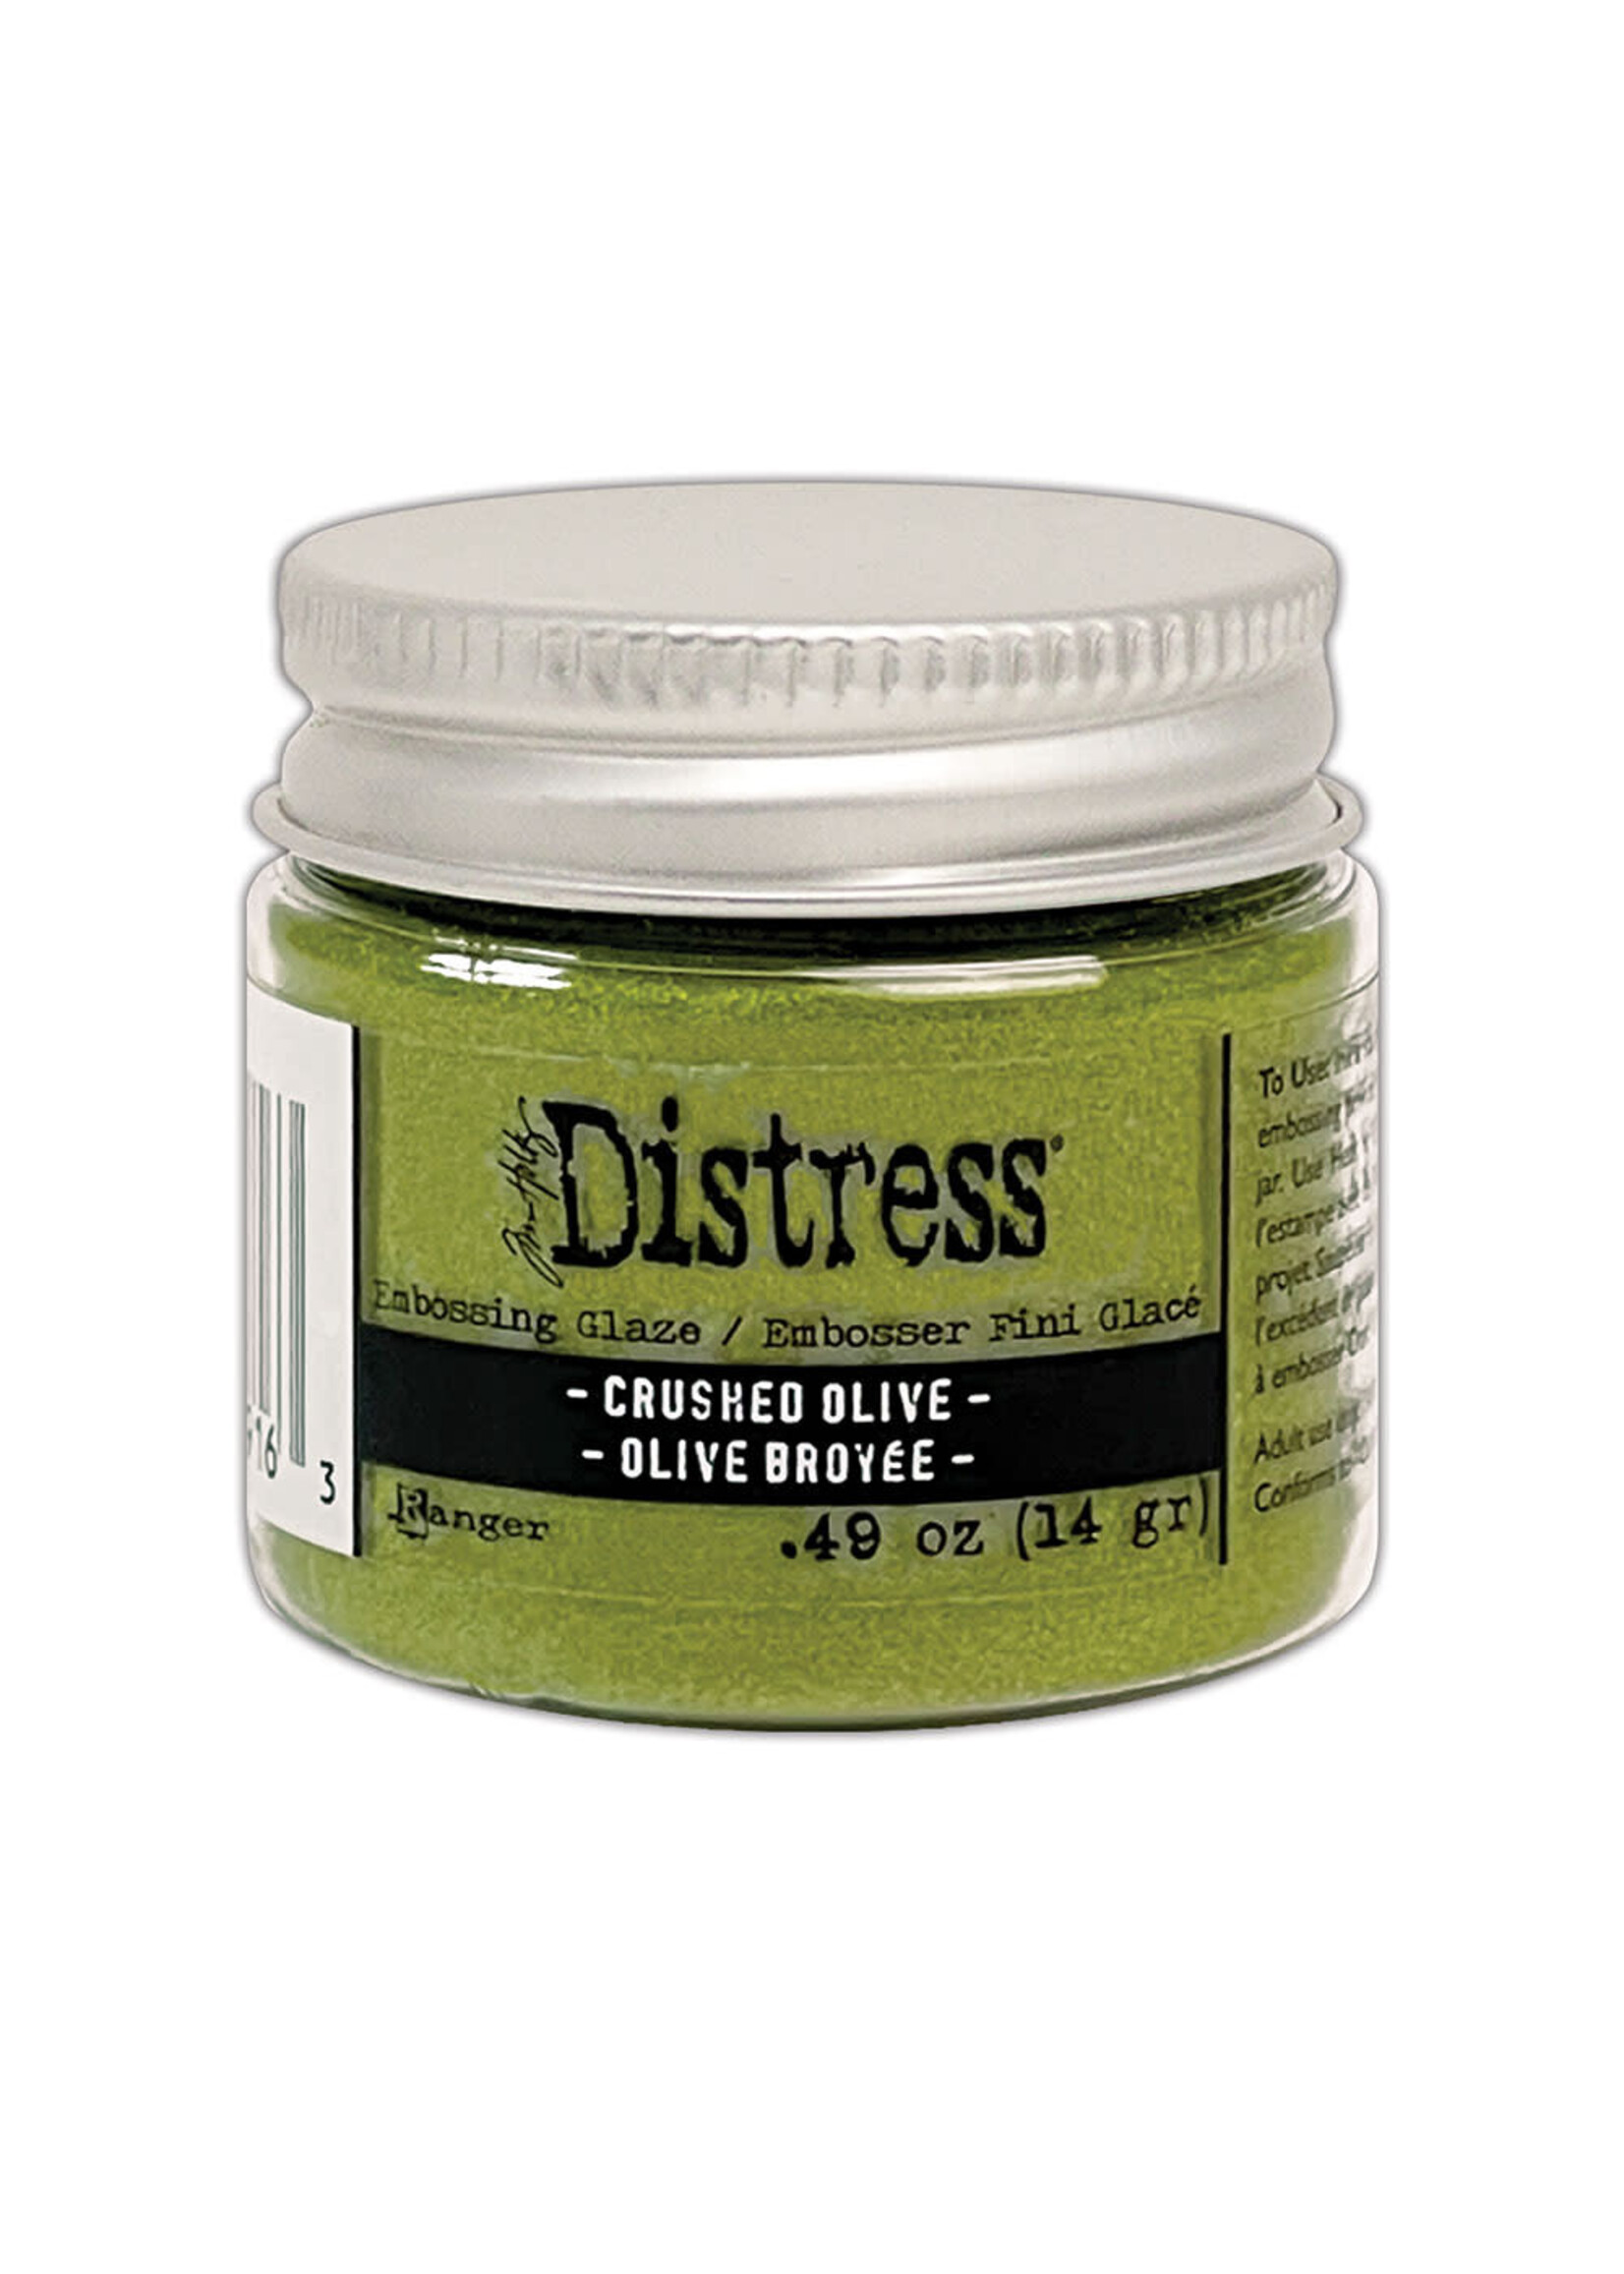 Tim Holtz Distress Embossing Glaze: Crushed Olive